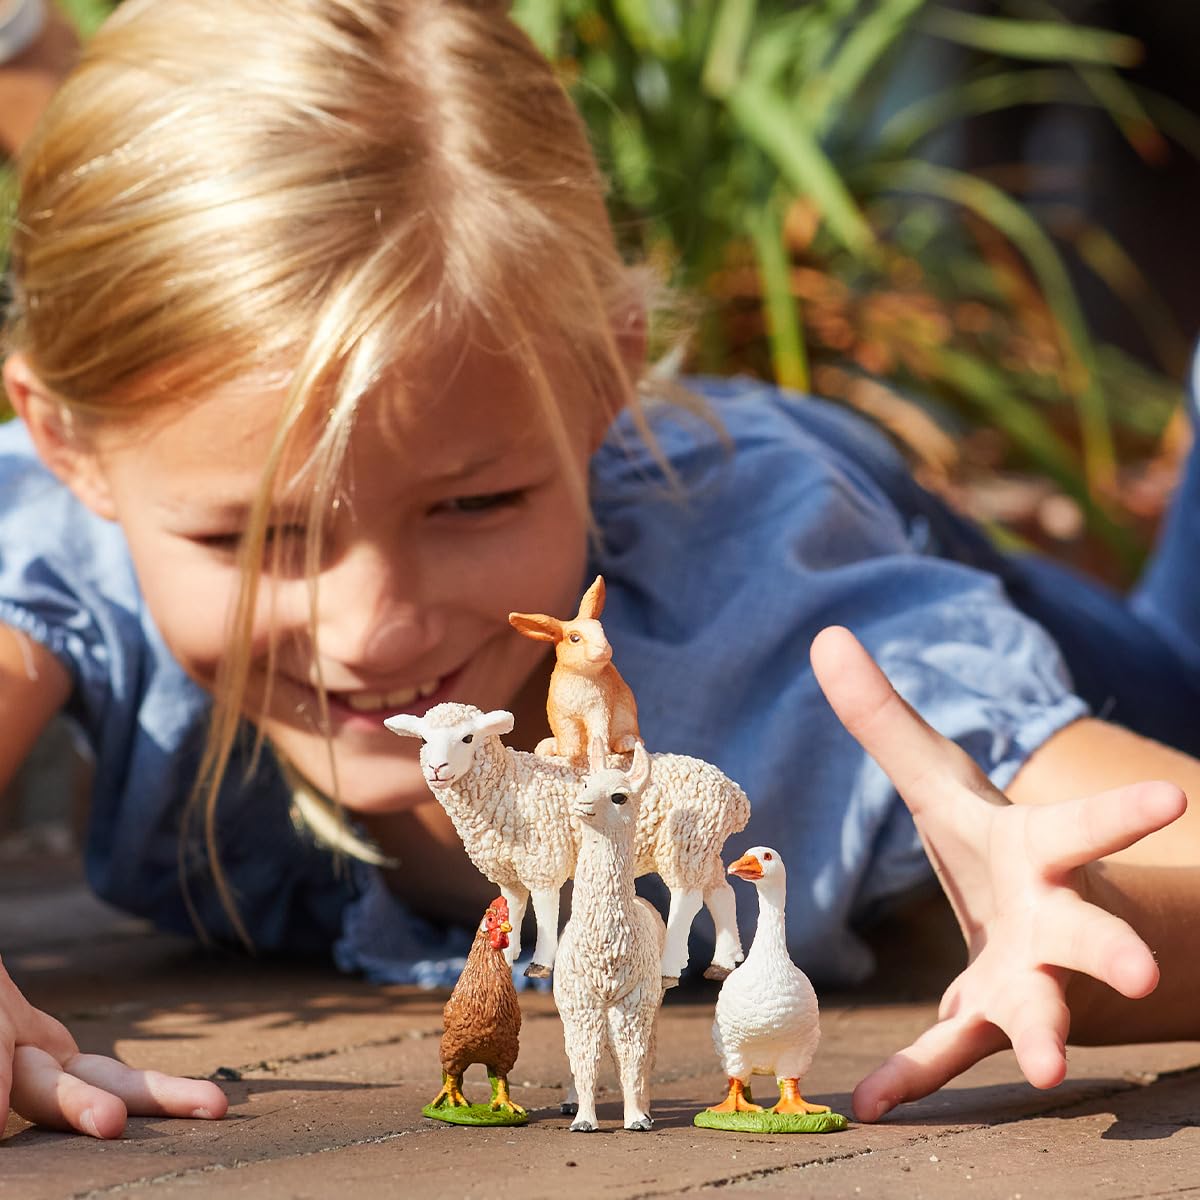 Schleich Farm World 5-Piece Farm Animal Toy Set Including Cute Llama, Rabbit, Sheep, Hen and Goose Animal Toys for Easter Baskets